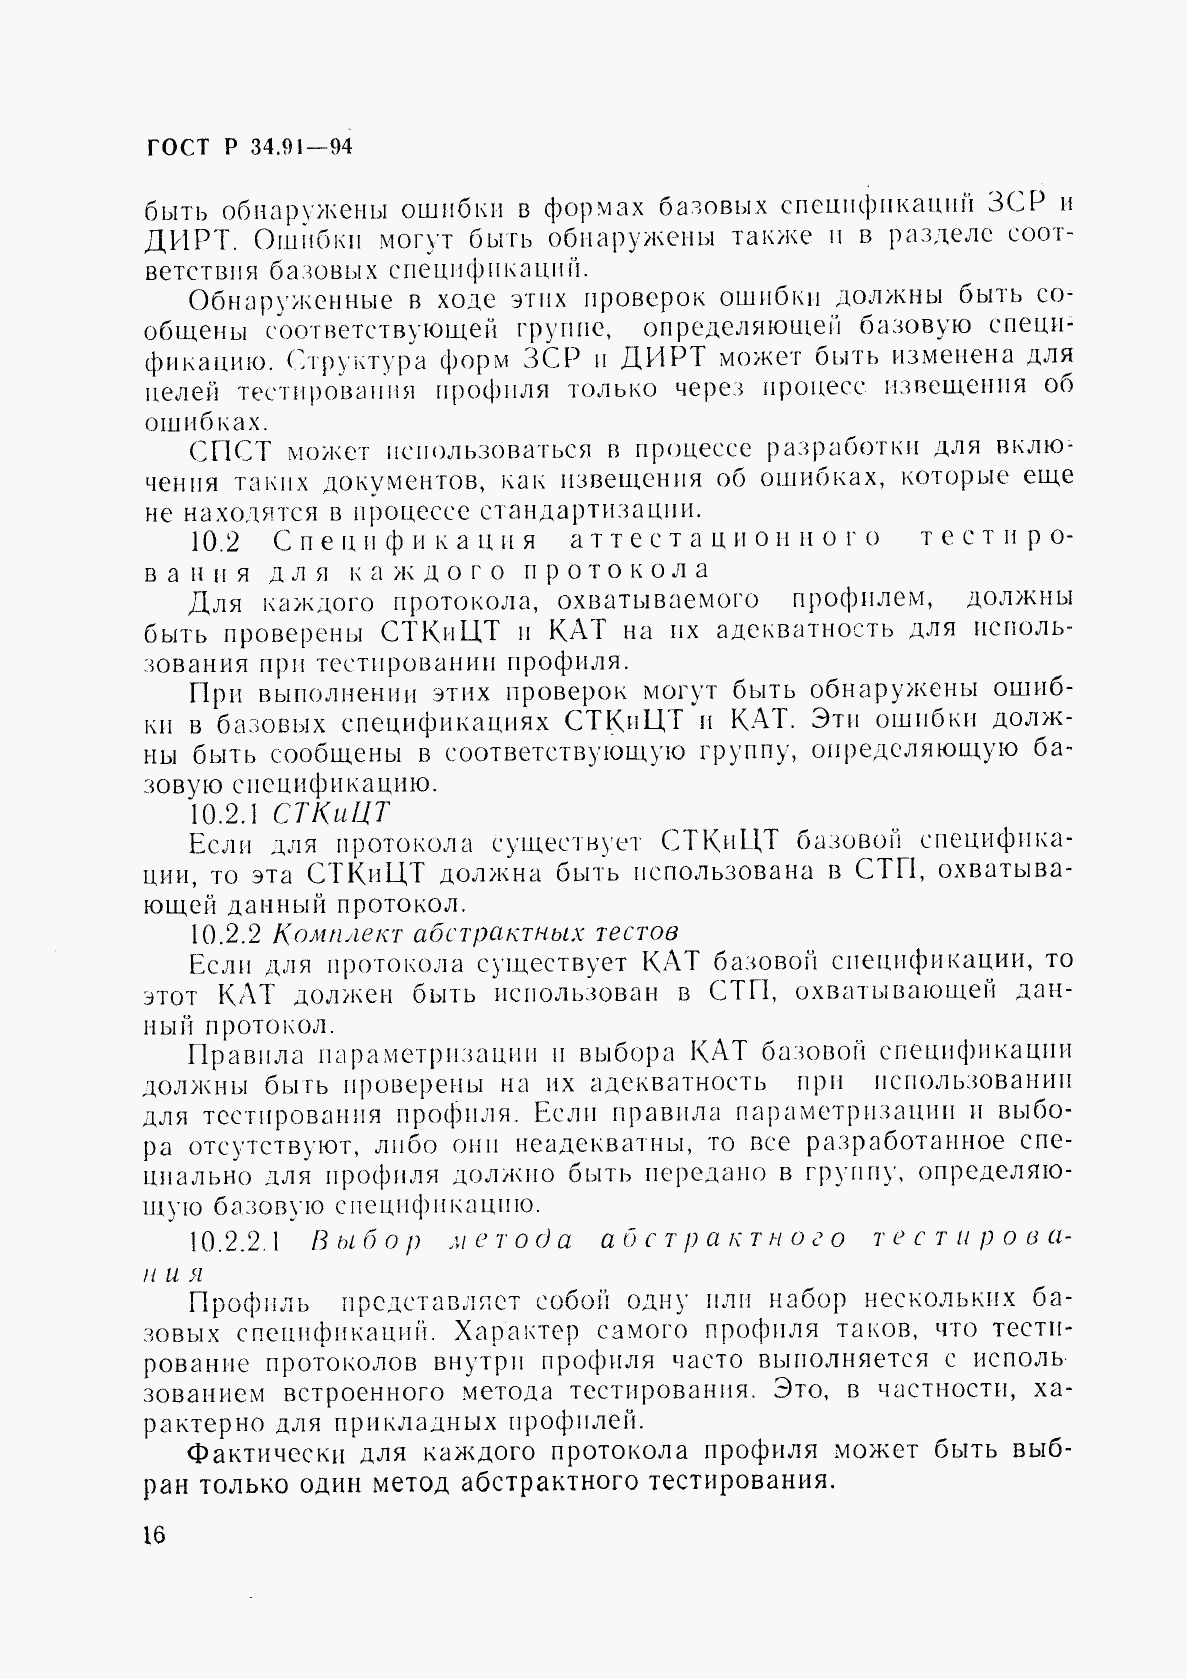 ГОСТ Р 34.91-94, страница 20